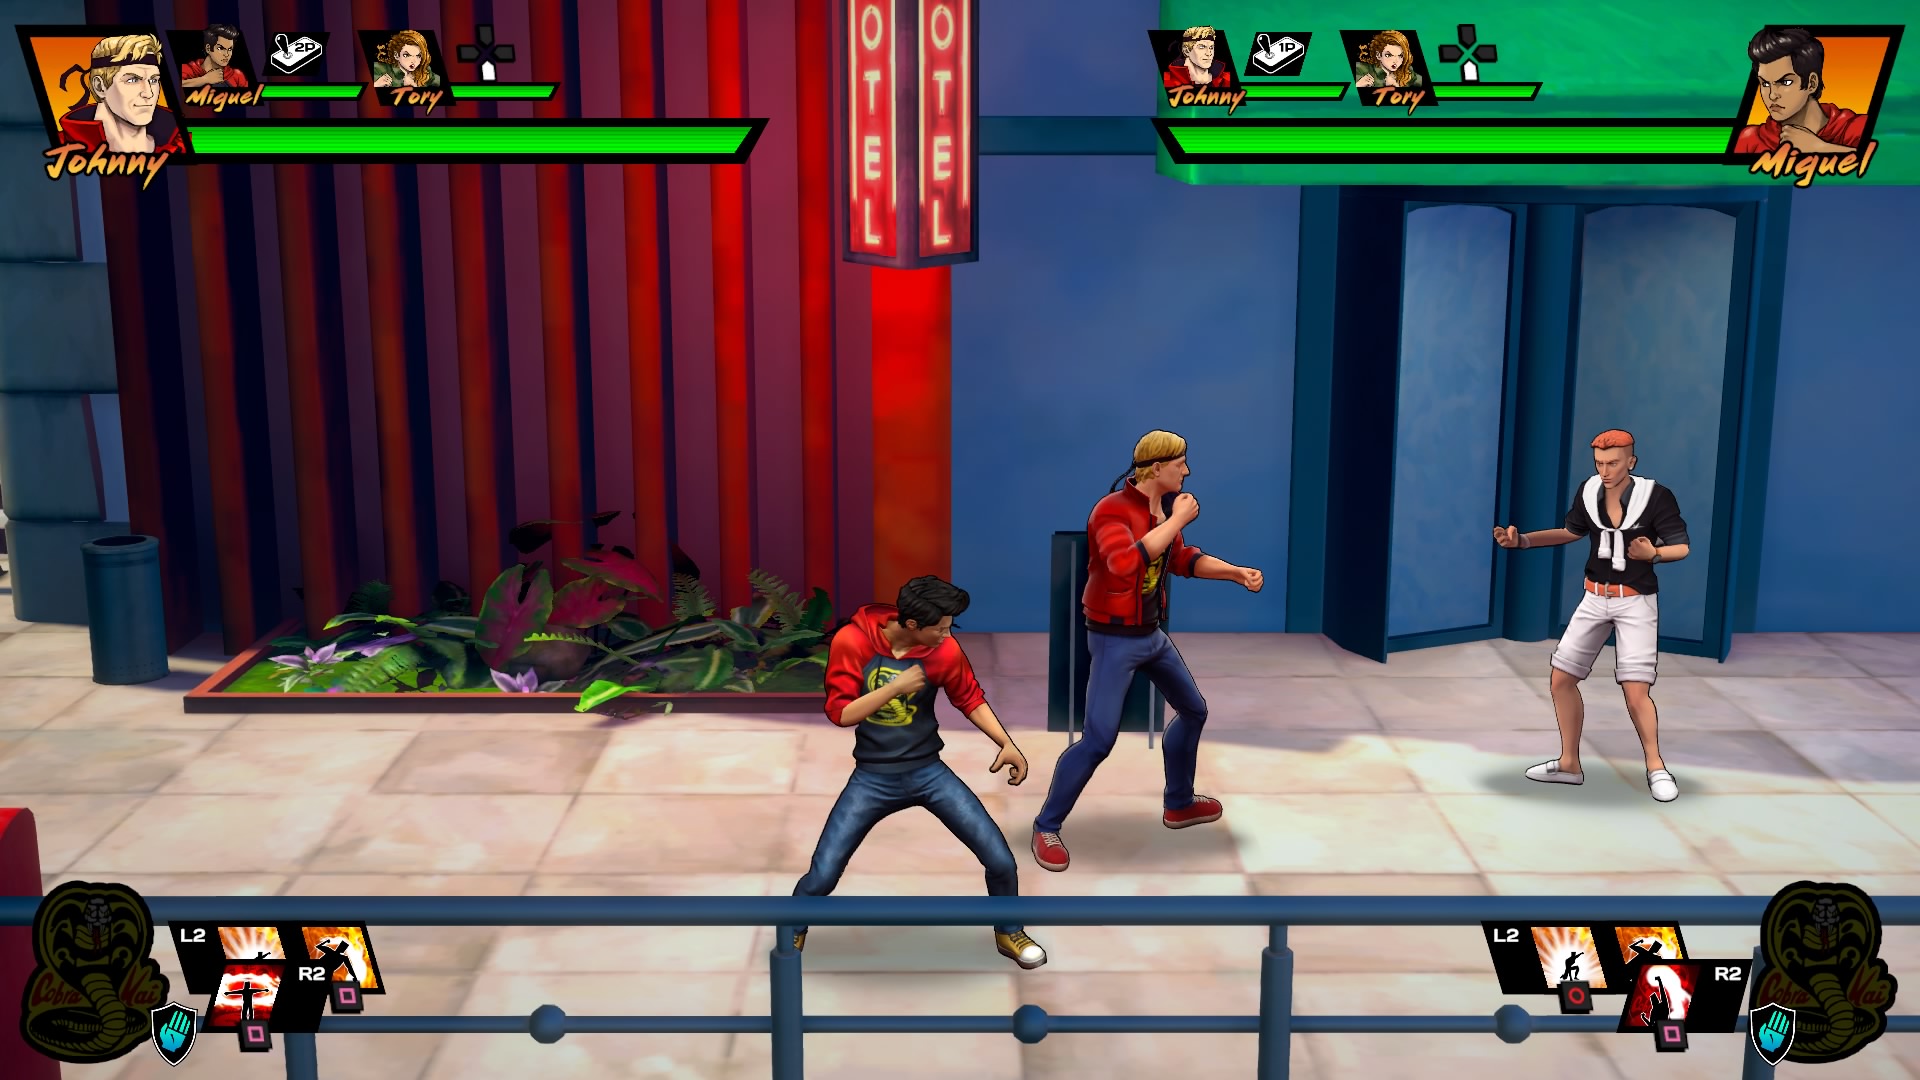 Cobra Kai - The Karate Kid Saga Continues | Download and Buy Today - Epic  Games Store